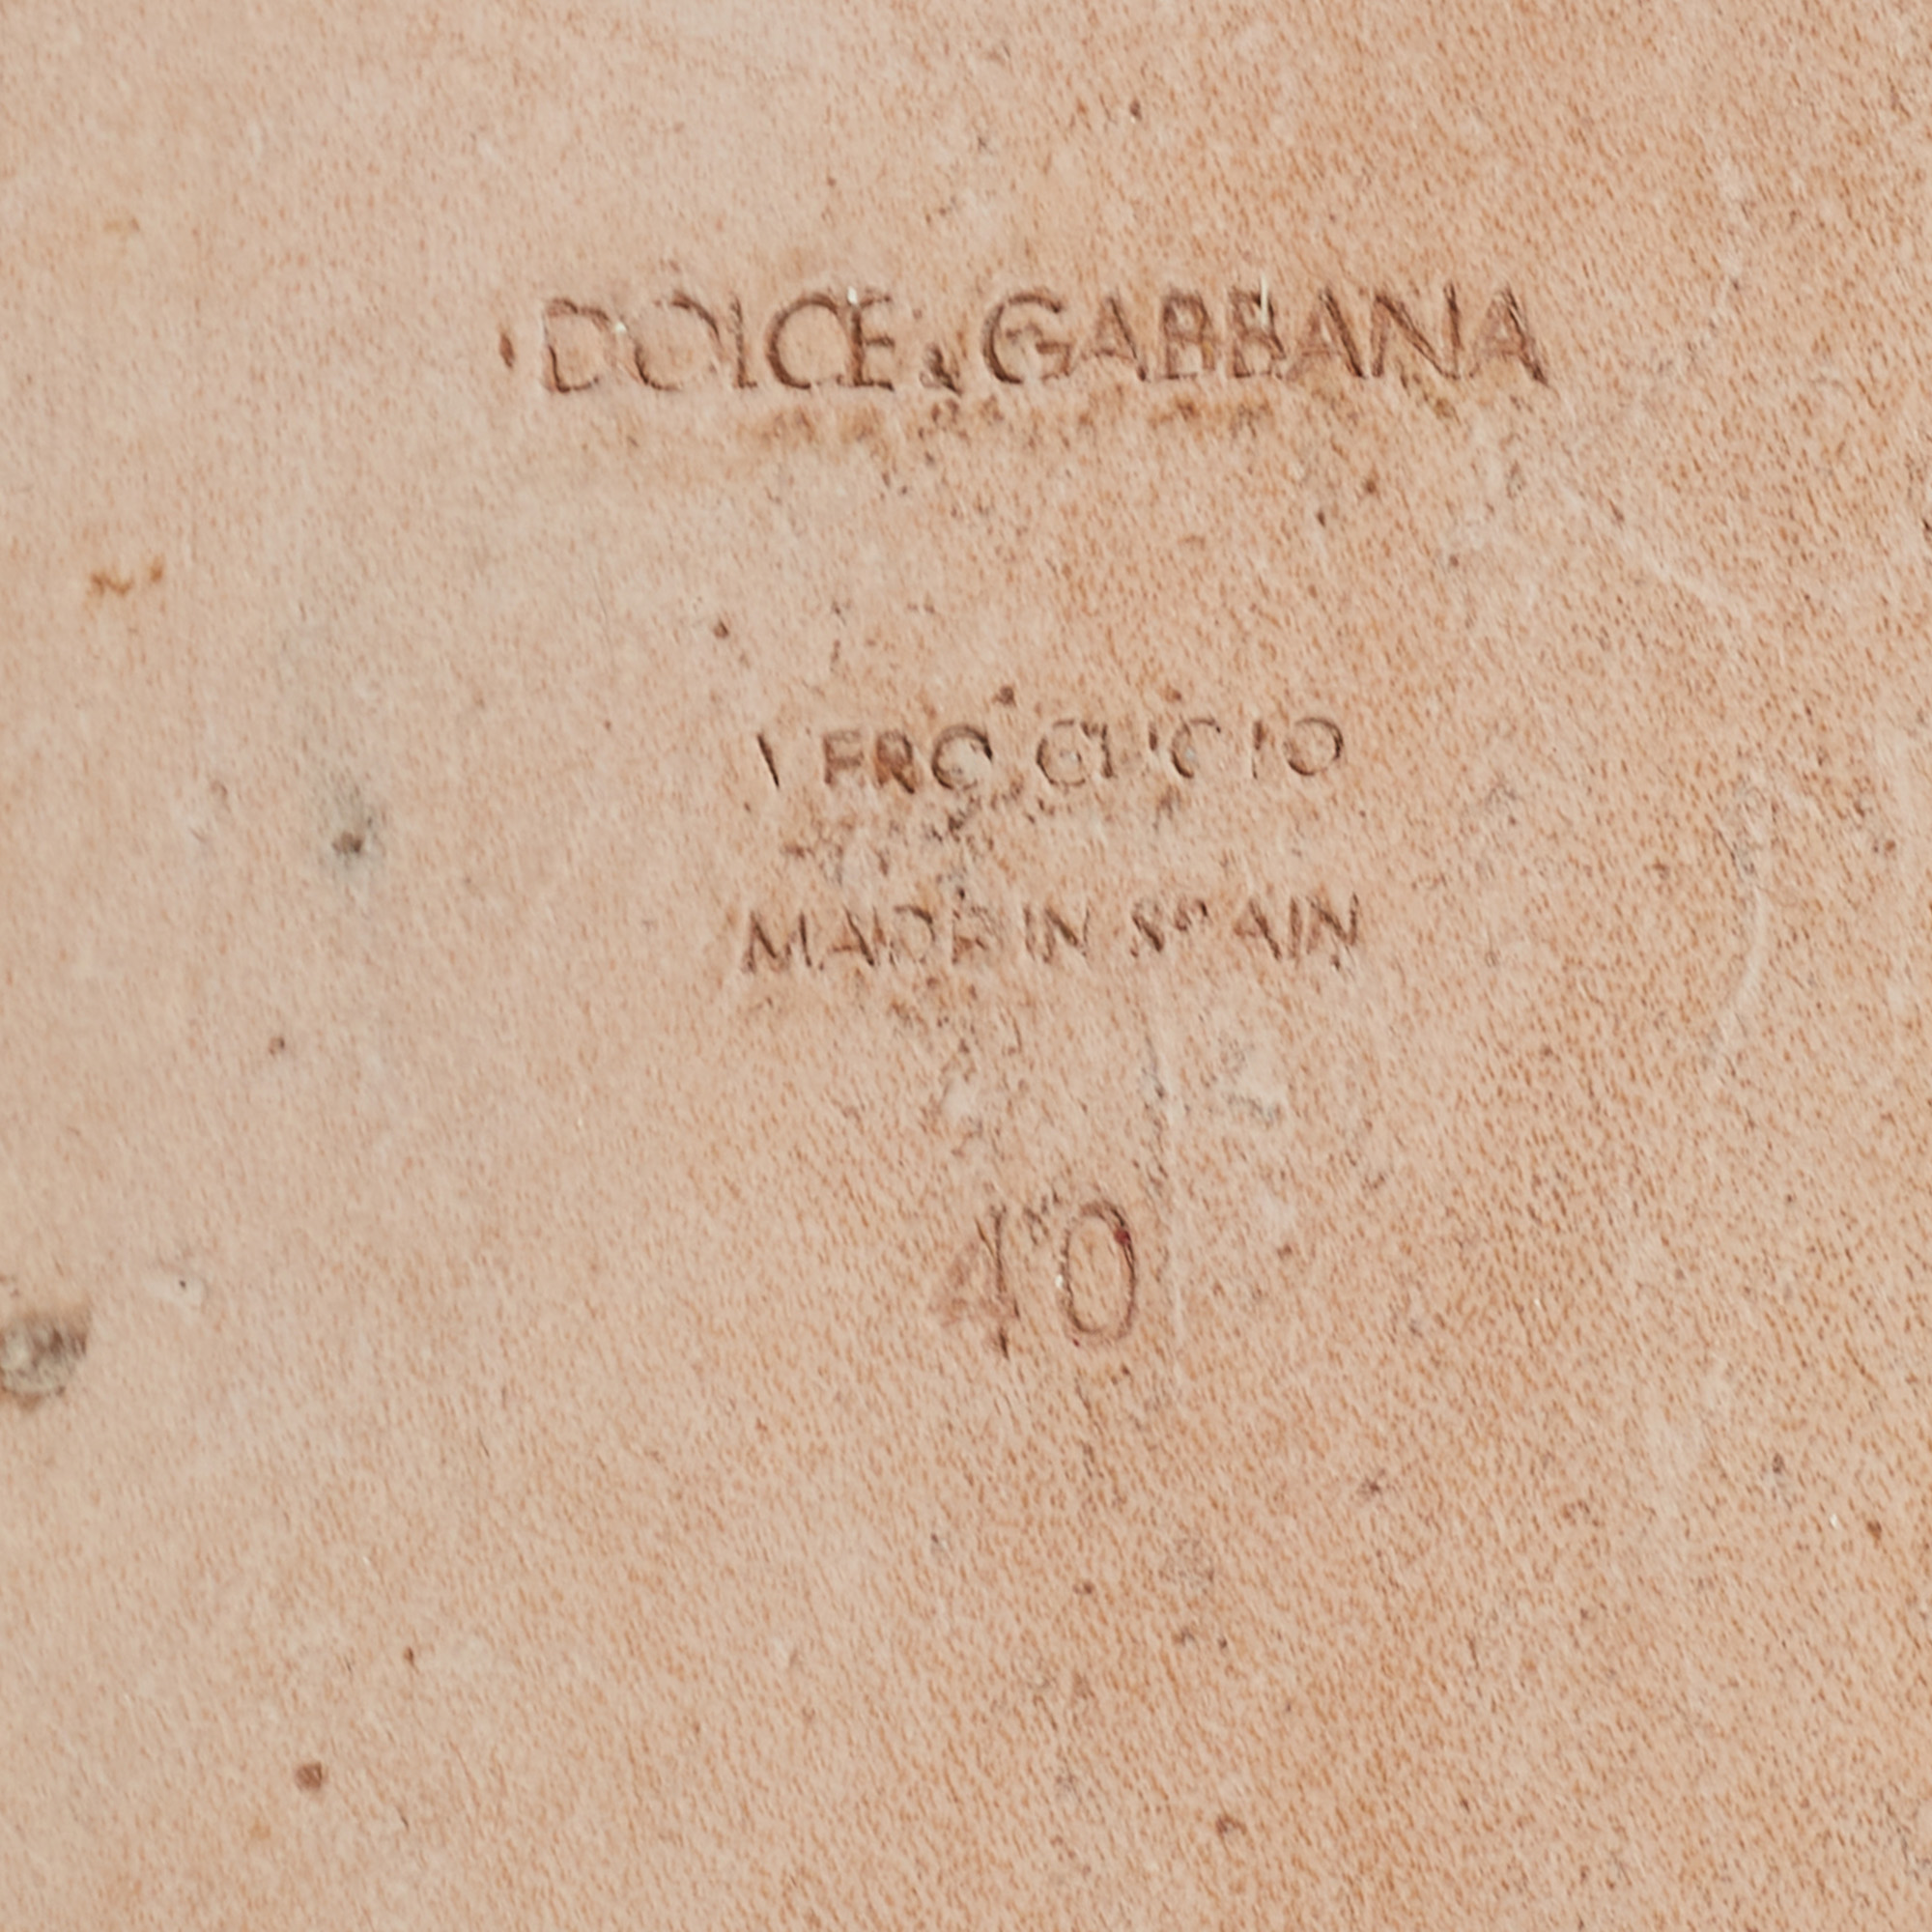 Dolce & Gabbana Multicolor Lemon Print Fabric Platform Espadrille Flats Size 40